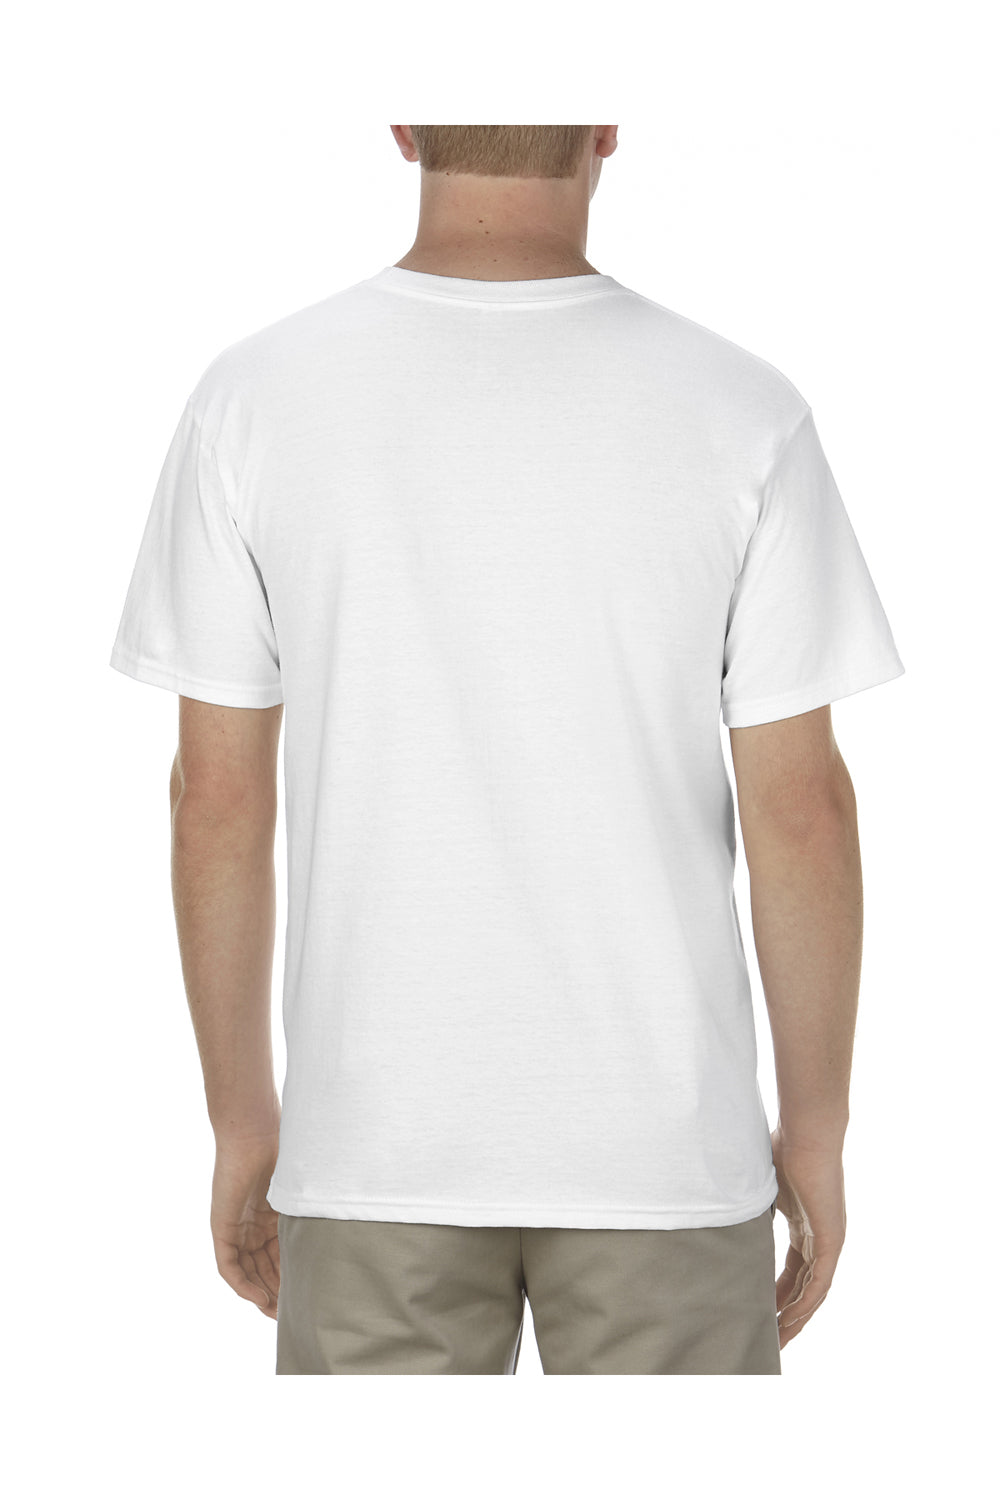 Alstyle AL1701 Mens Soft Spun Short Sleeve Crewneck T-Shirt White Back